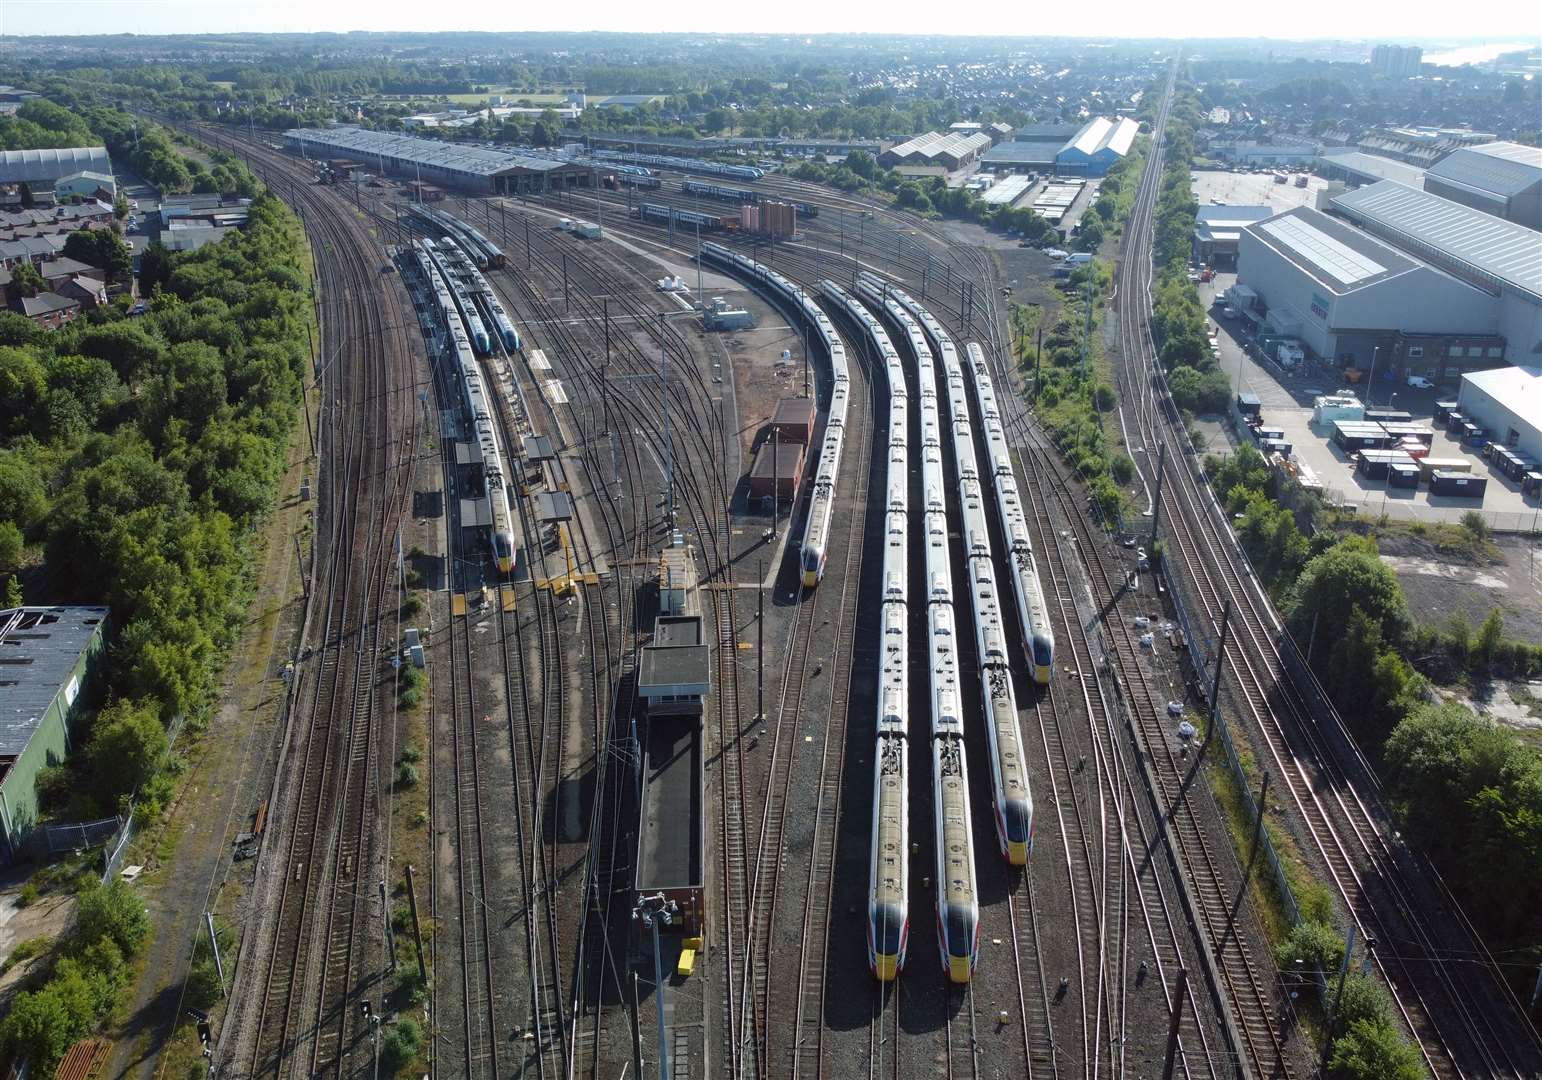 Trains sit in sidings at Heaton Depot in Newcastle (Owen Humphreys/PA)